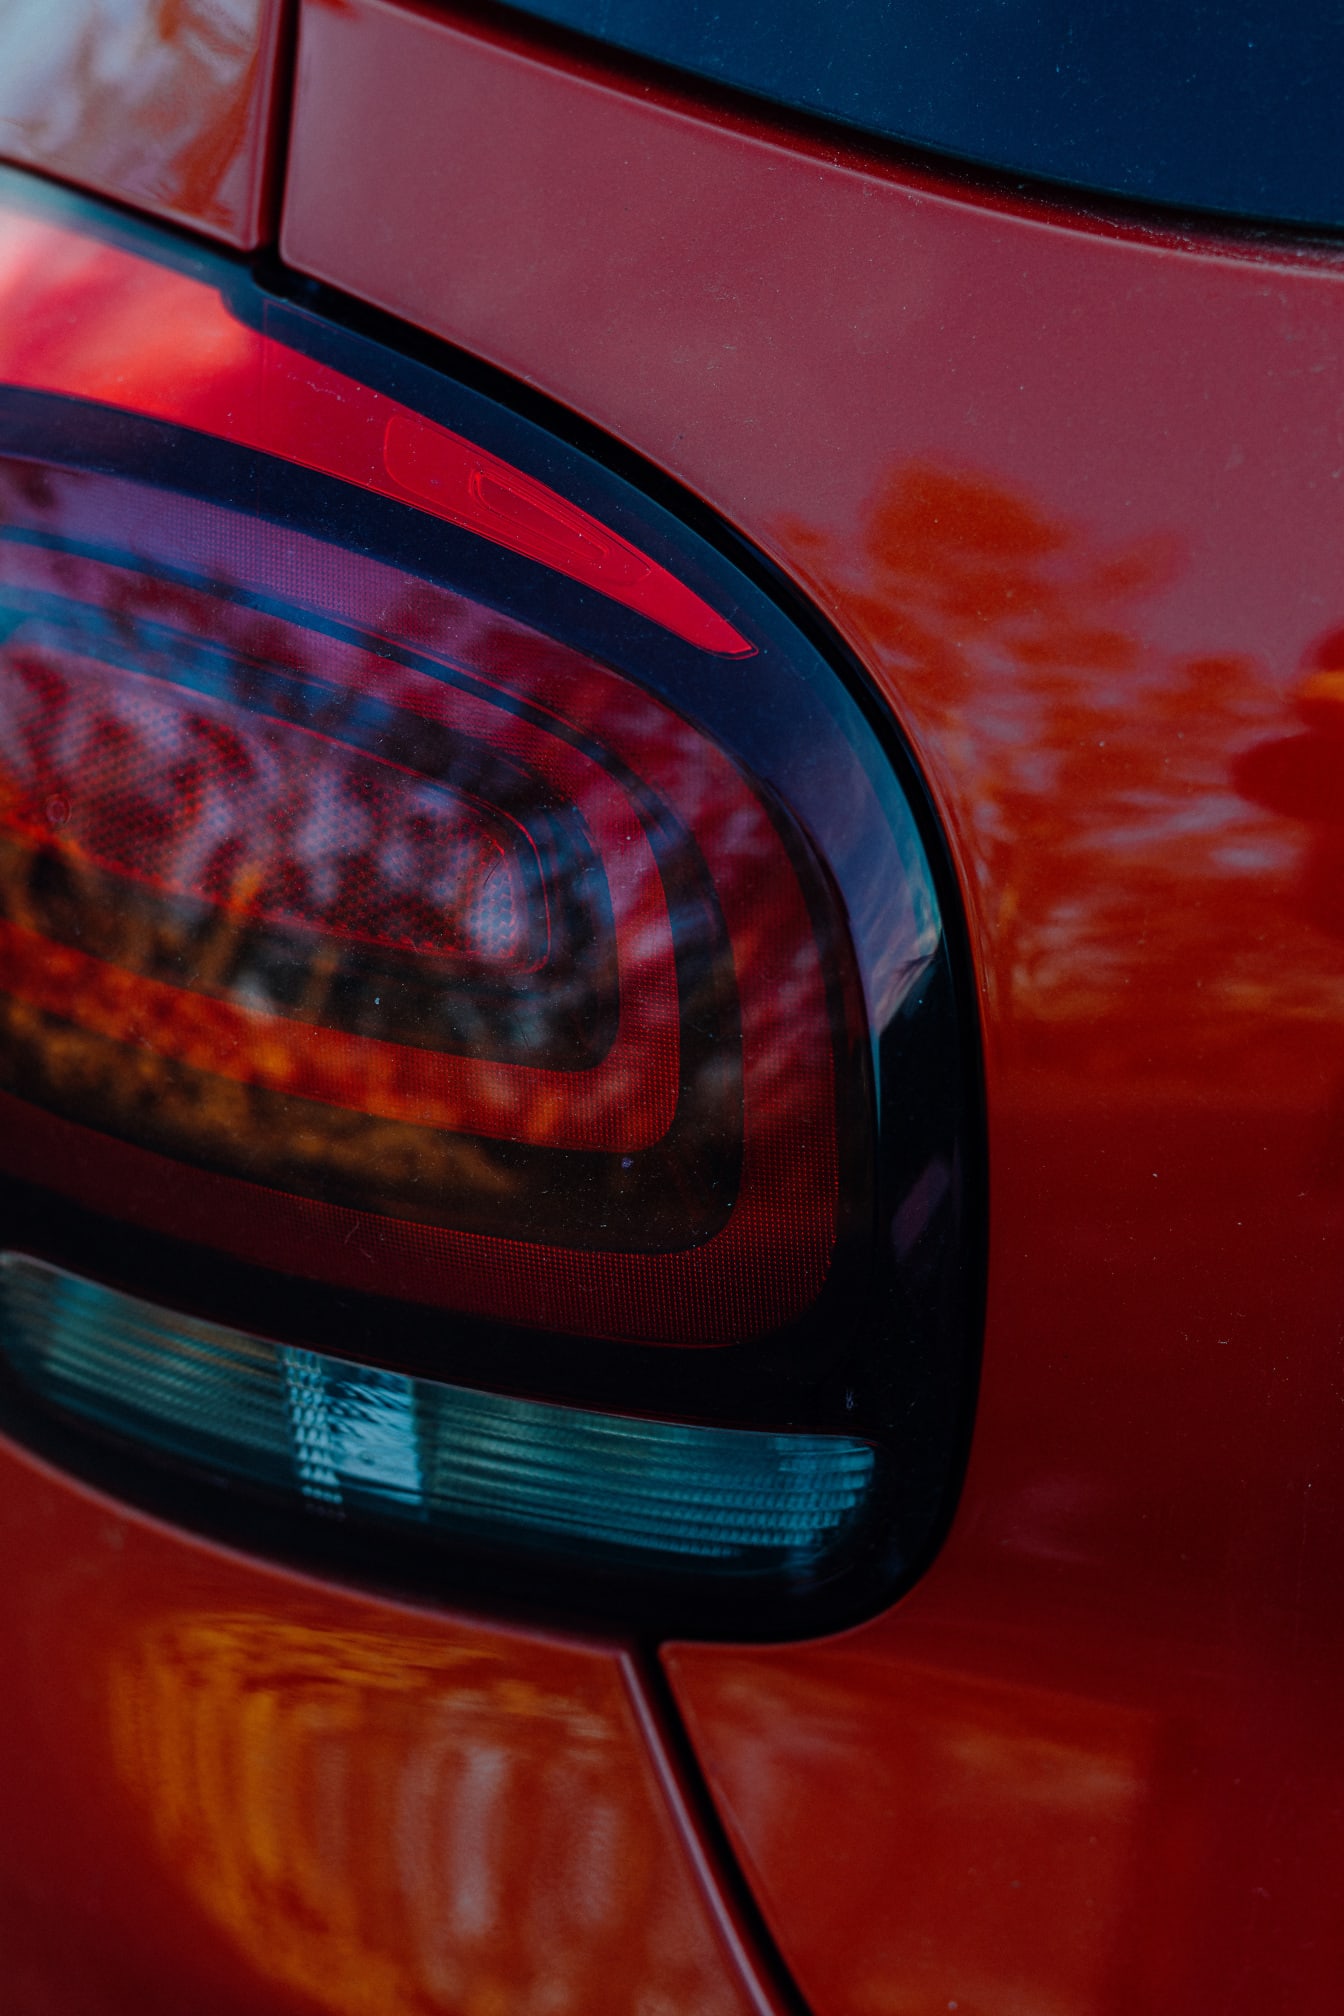 Tampilan close-up lampu belakang pada mobil metalik merah tua